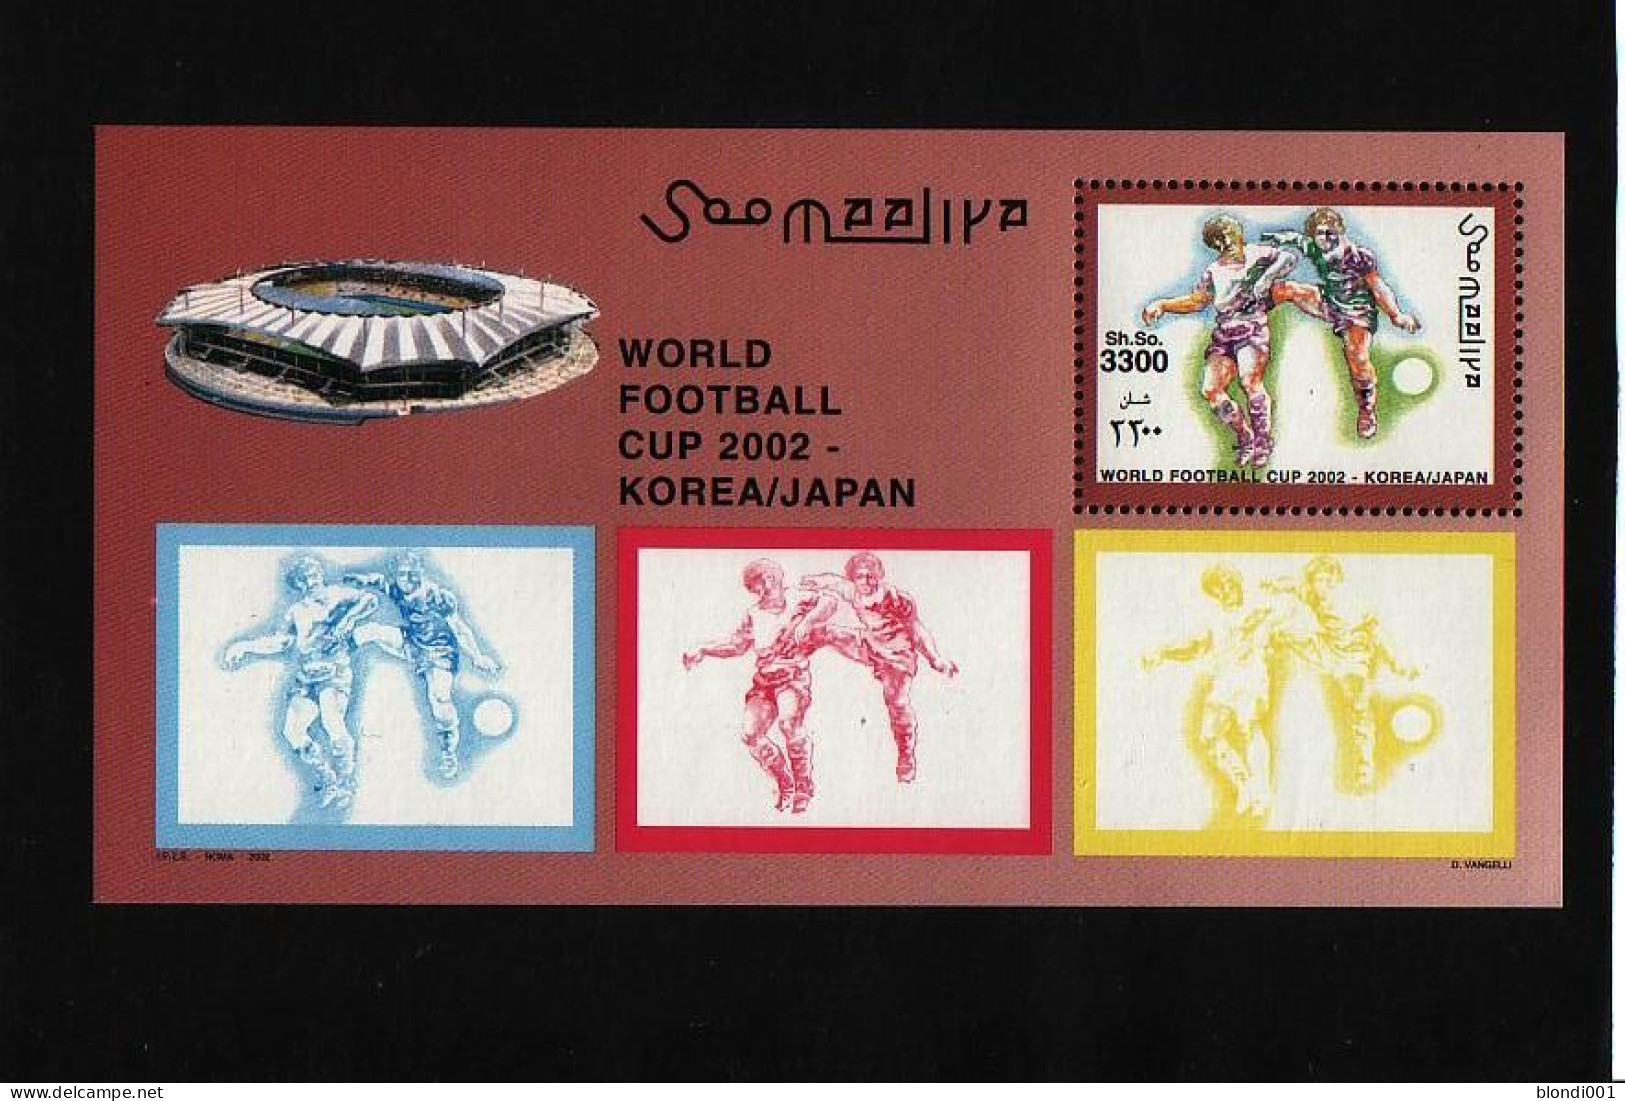 Soccer World Cup 2002 - SOMALIA - S/S MNH - 2002 – South Korea / Japan